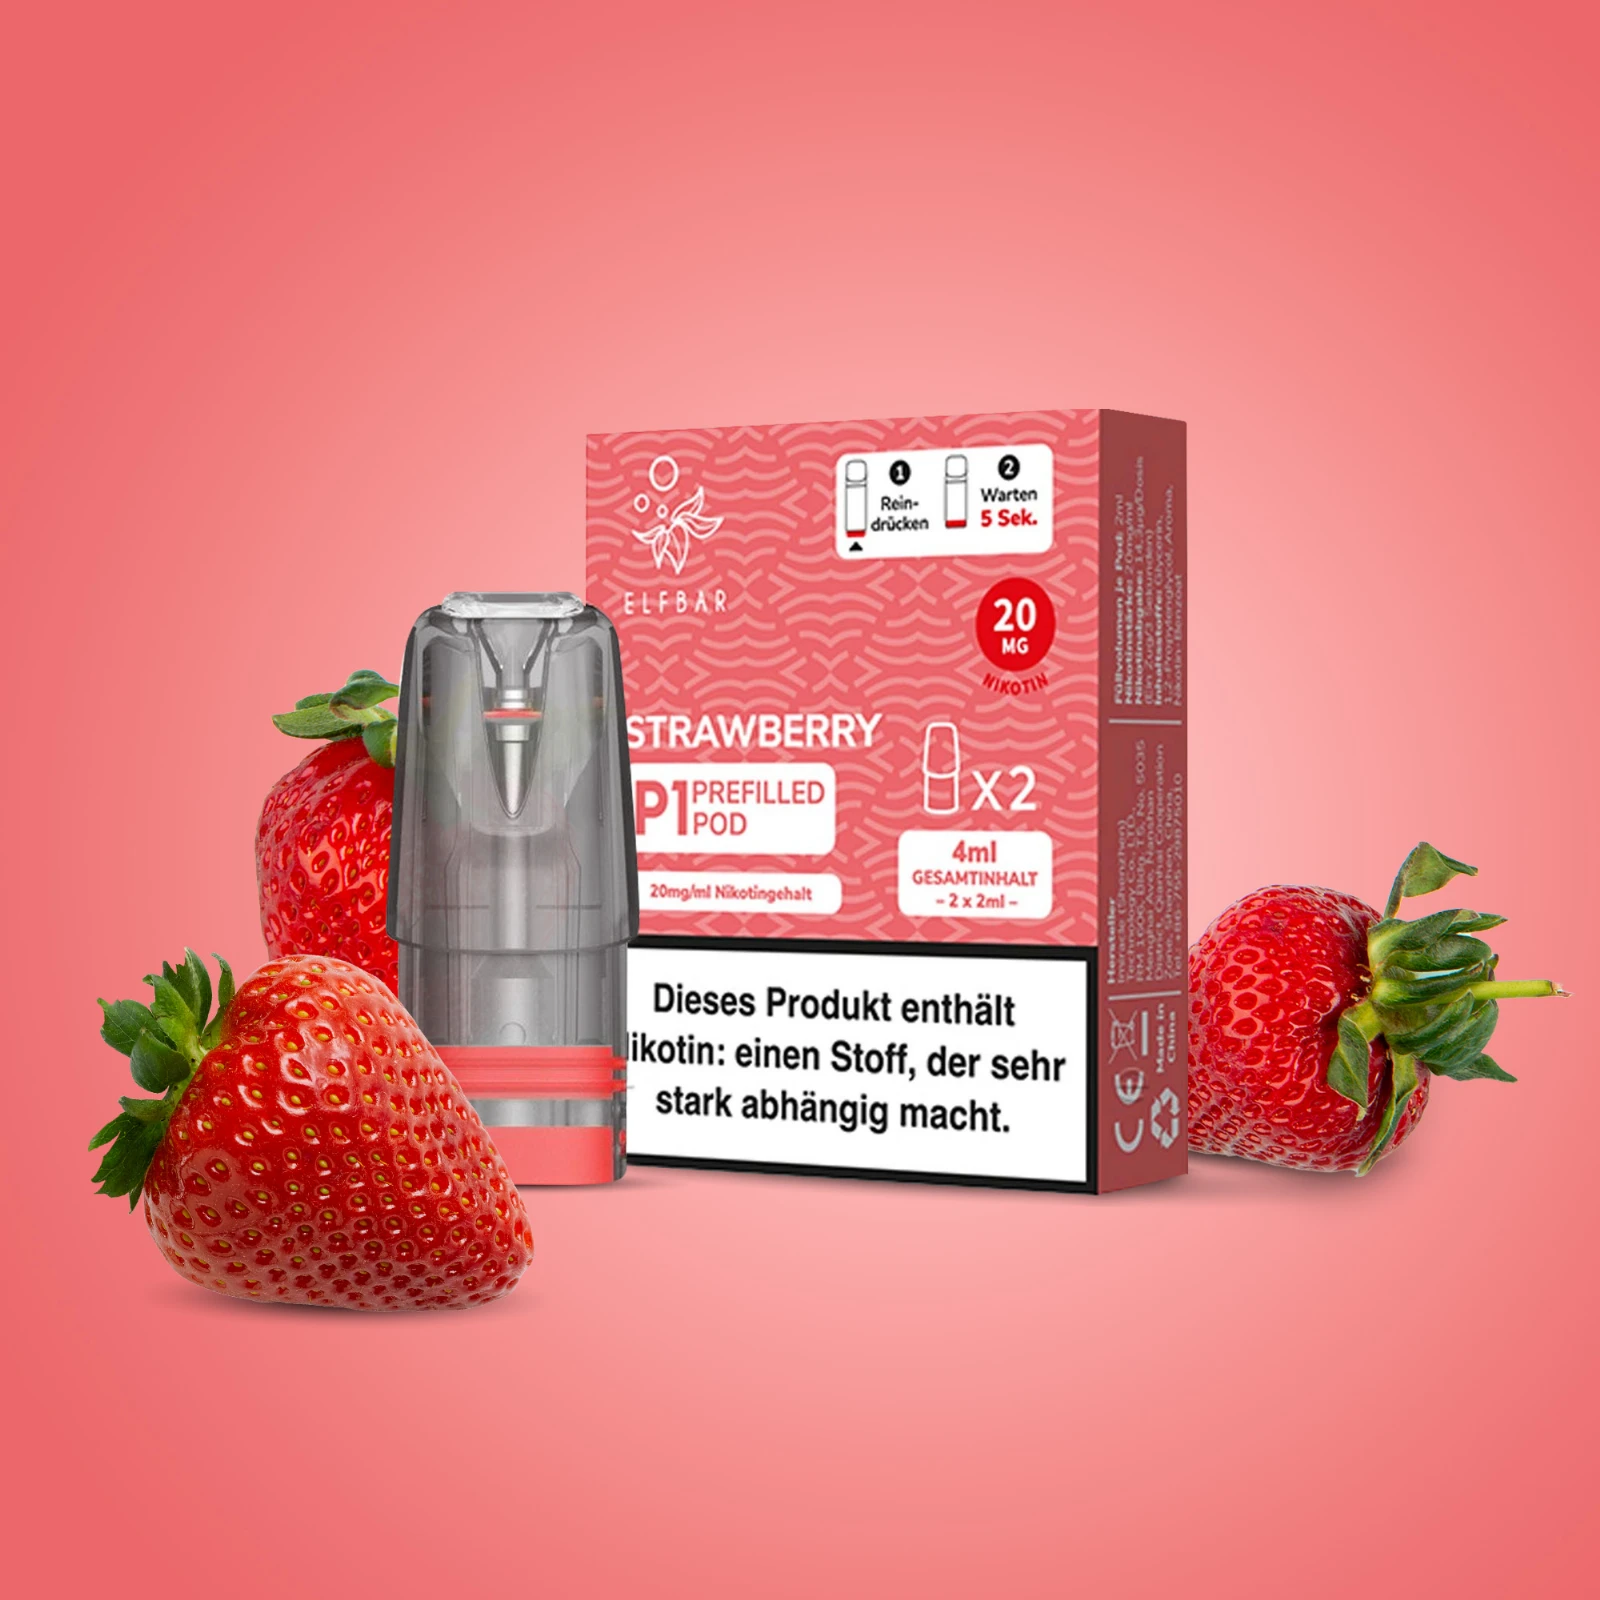 Elf Bar Mate 500 P1 Strawberry Prefilled Pod | Online bestellen 1